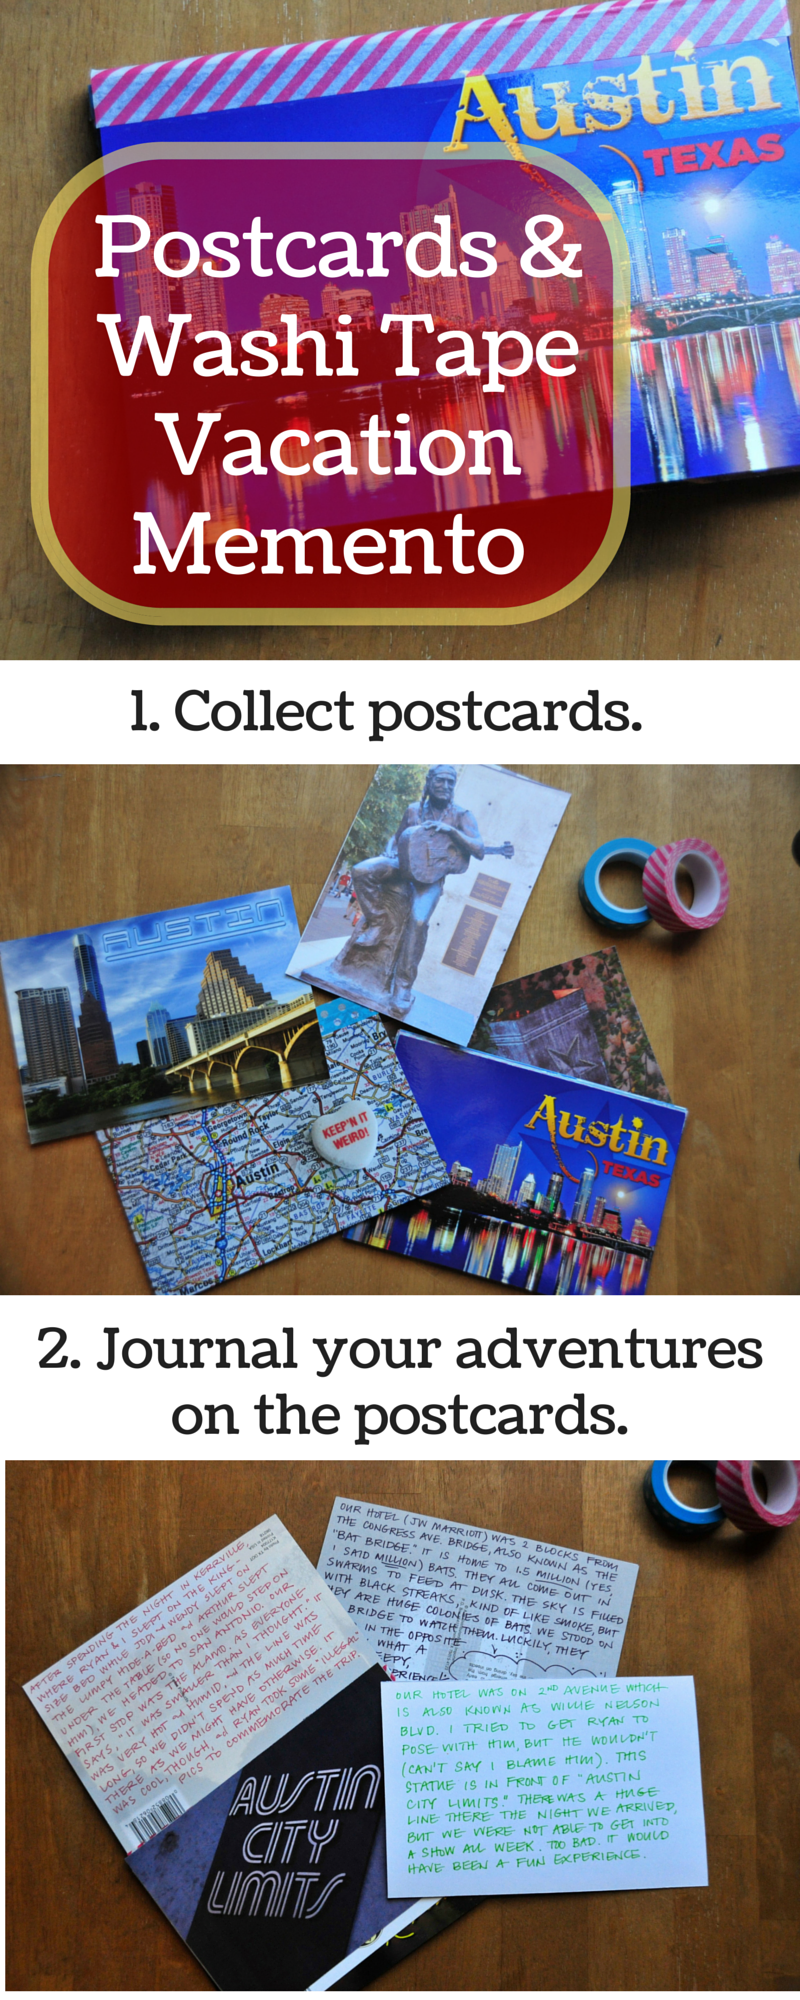 Postcards & Washi Tape Vacation Memento